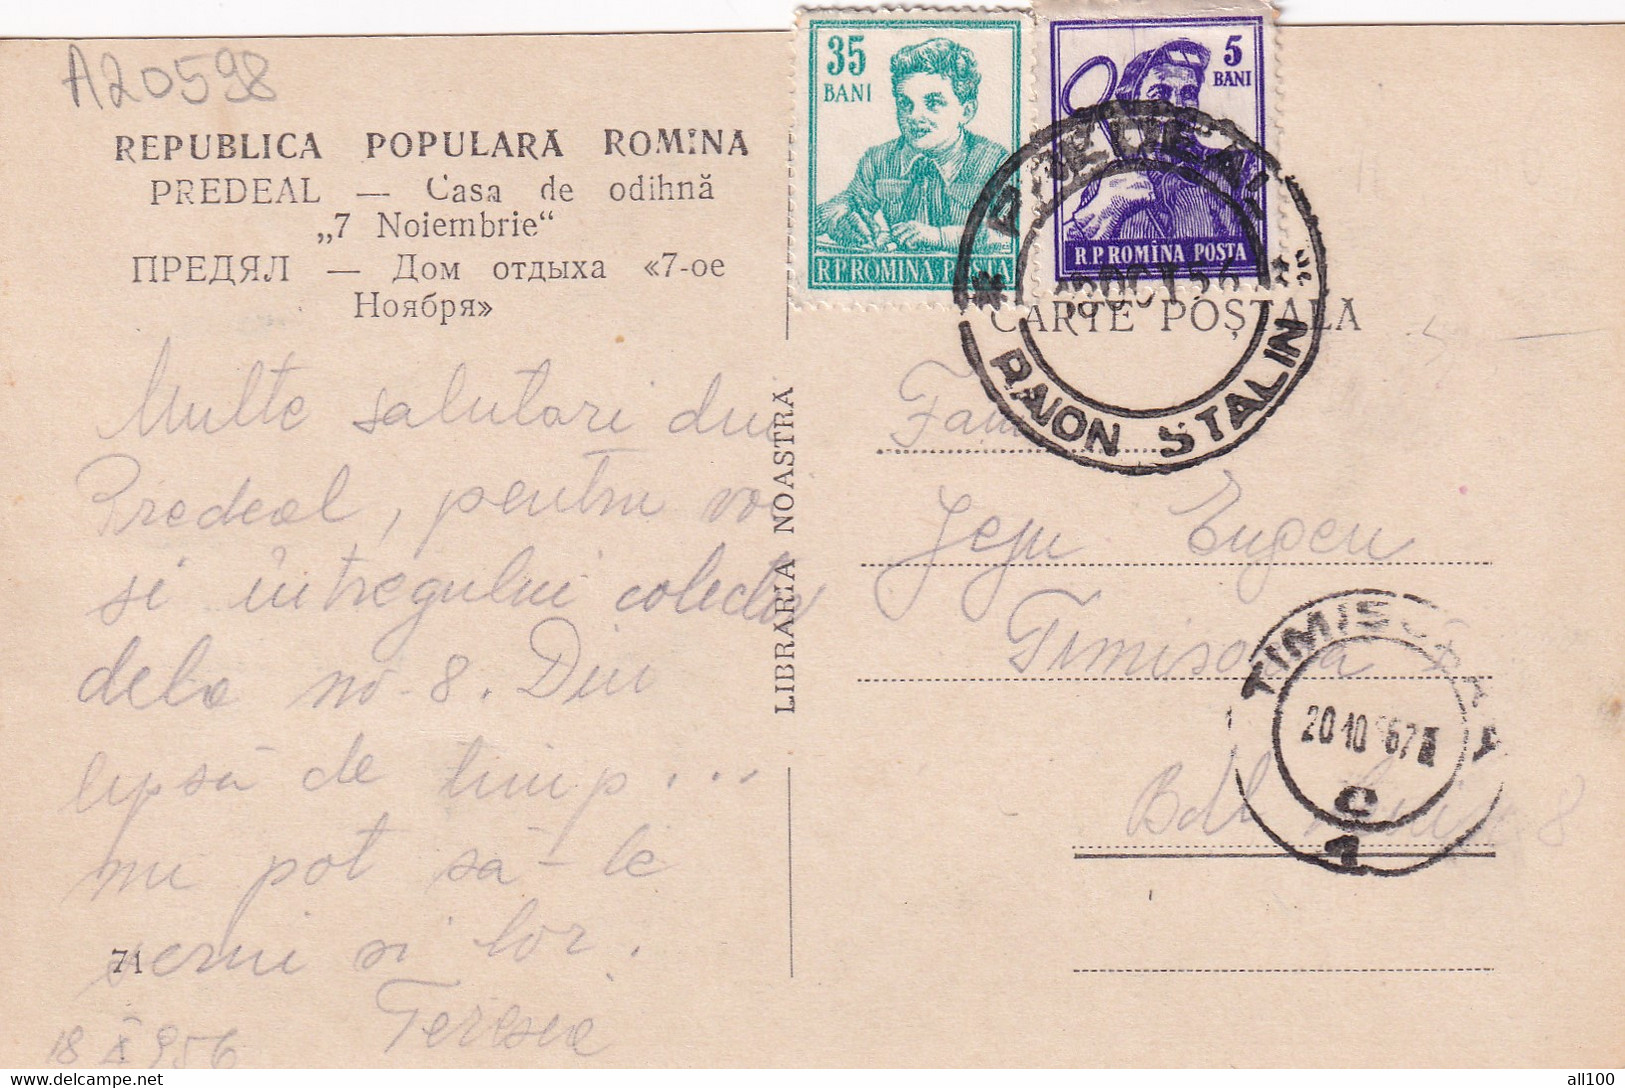 A20598 - PREDEAL CASA DE ODIHNA 7 NOIEMBRIE ROMANIA POST CARD USED 1967 STAMP RPR REPUBLICA POPULARA ROMANA - Santé